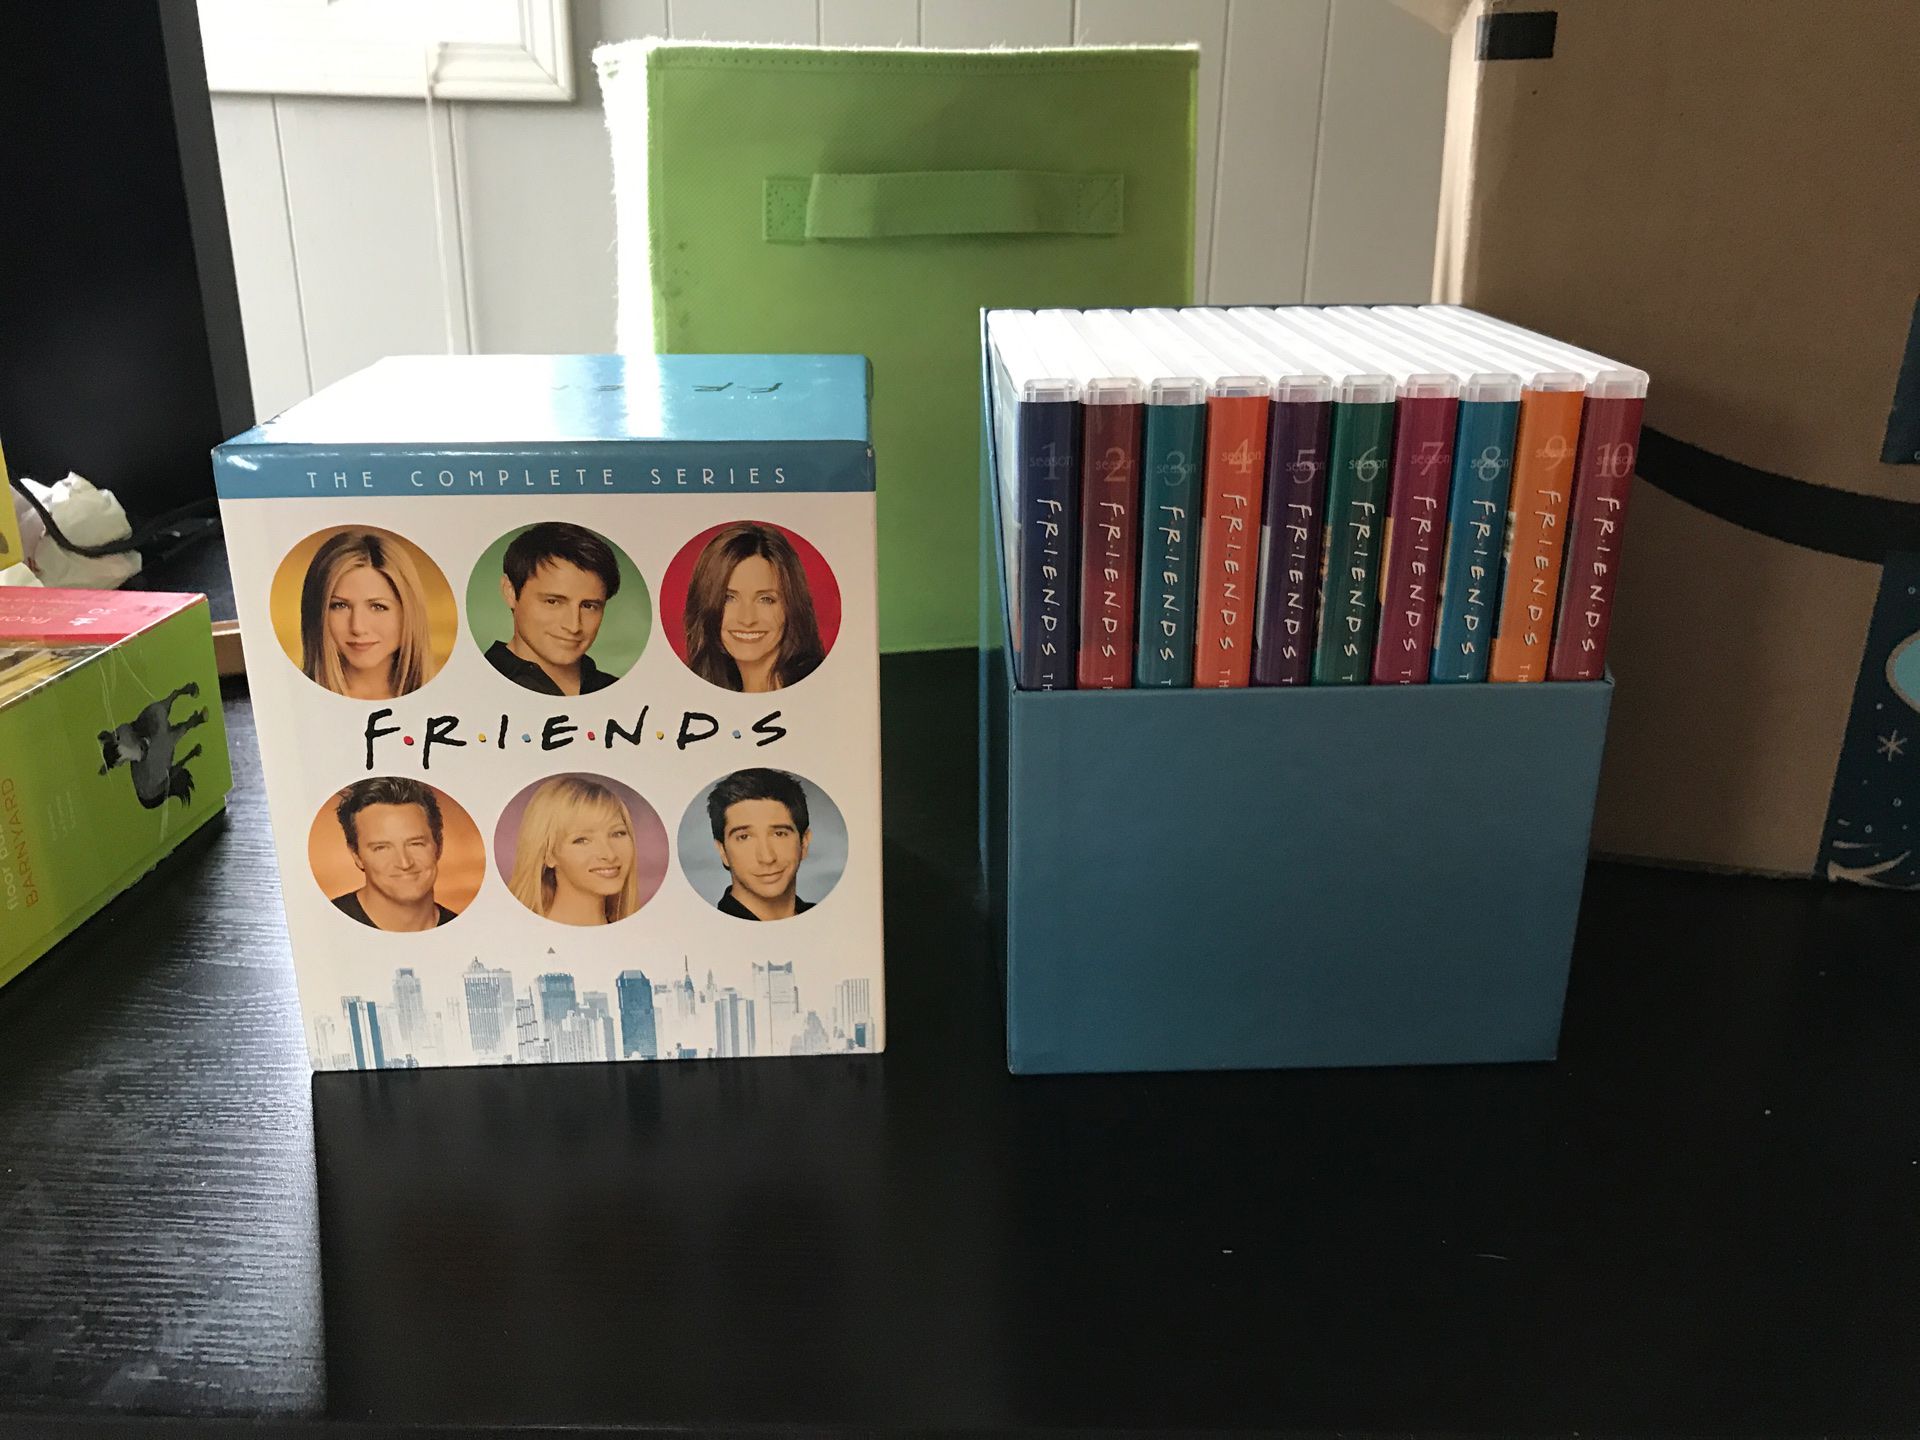 Friends series on DVD